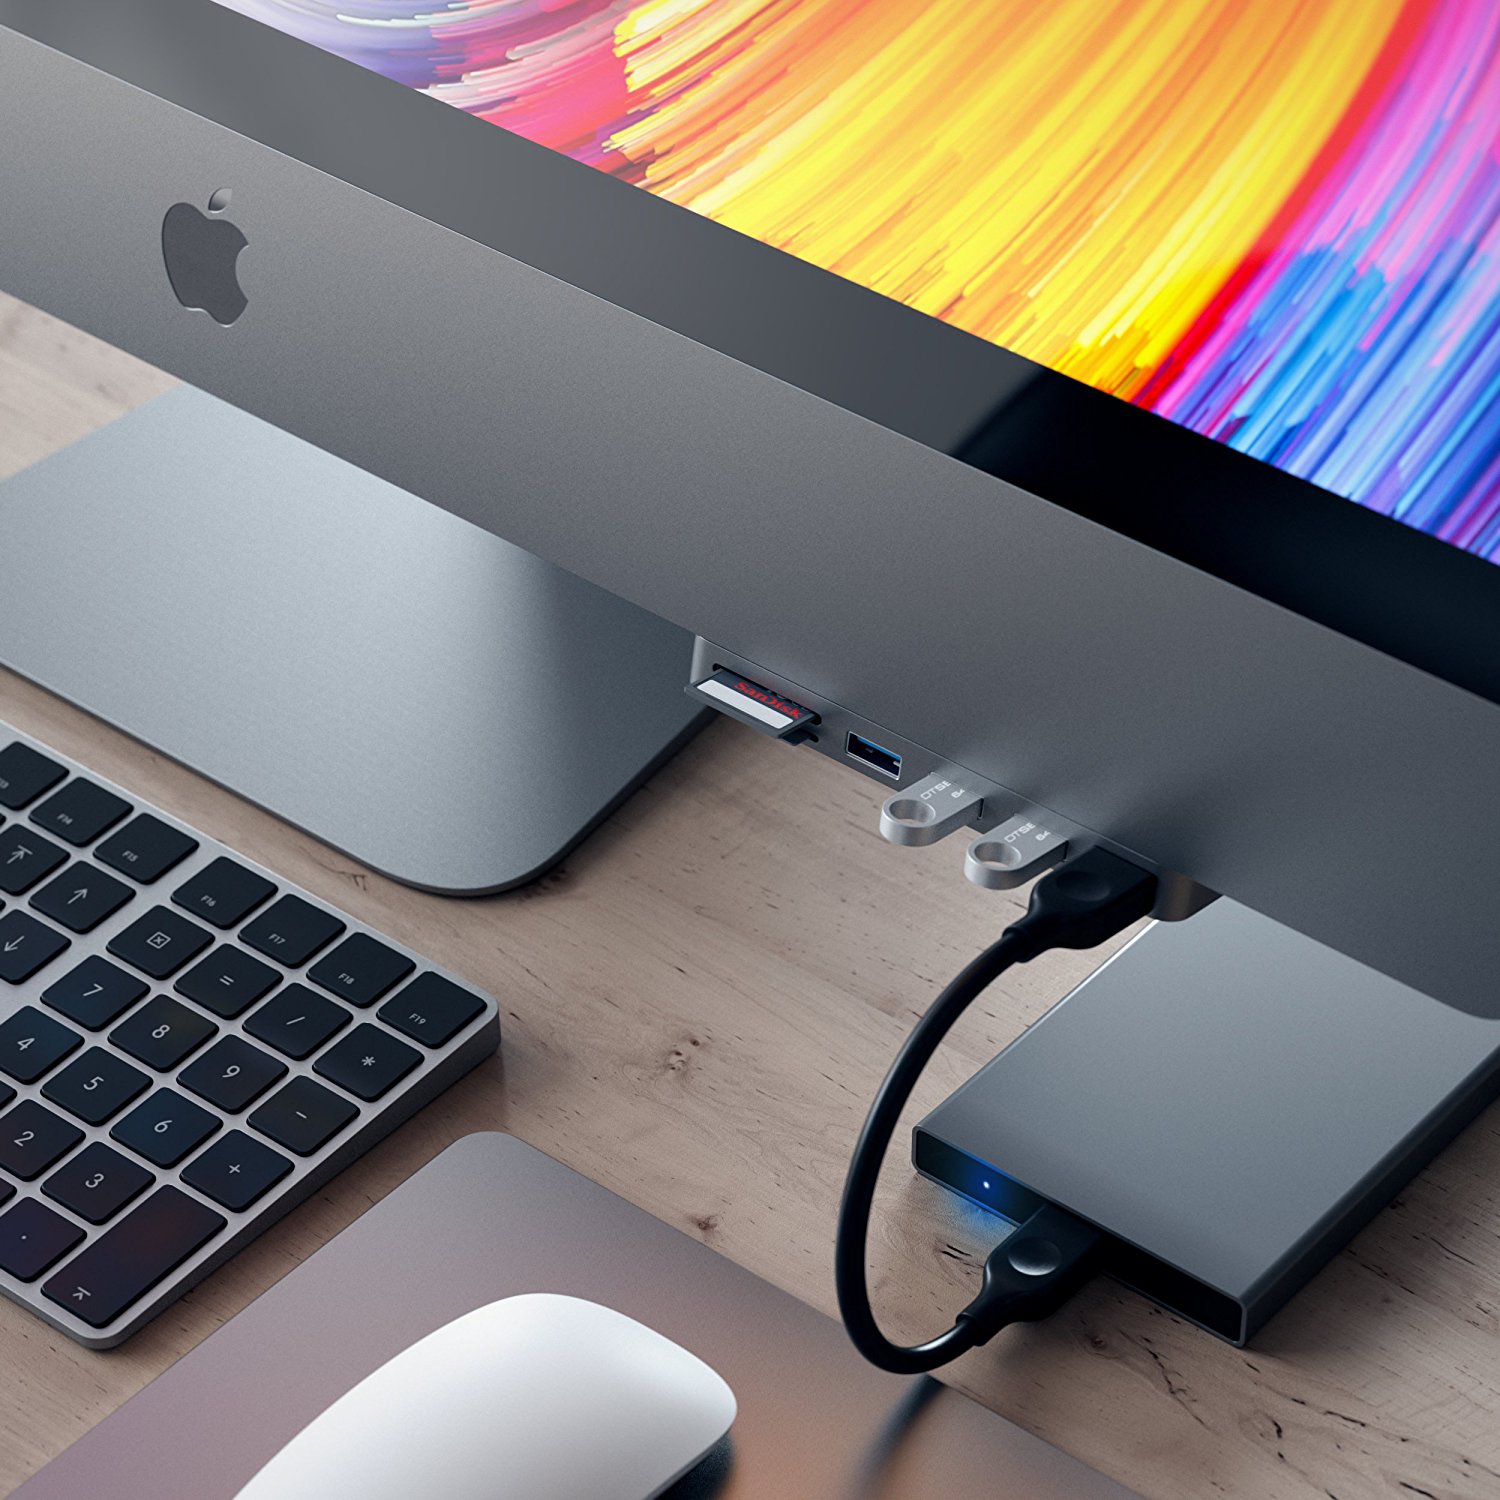 USB-хаб (концентратор) Satechi Aluminium Type-C Clamp Hub Pro Space Gray для iMac Pro и iMac 2017